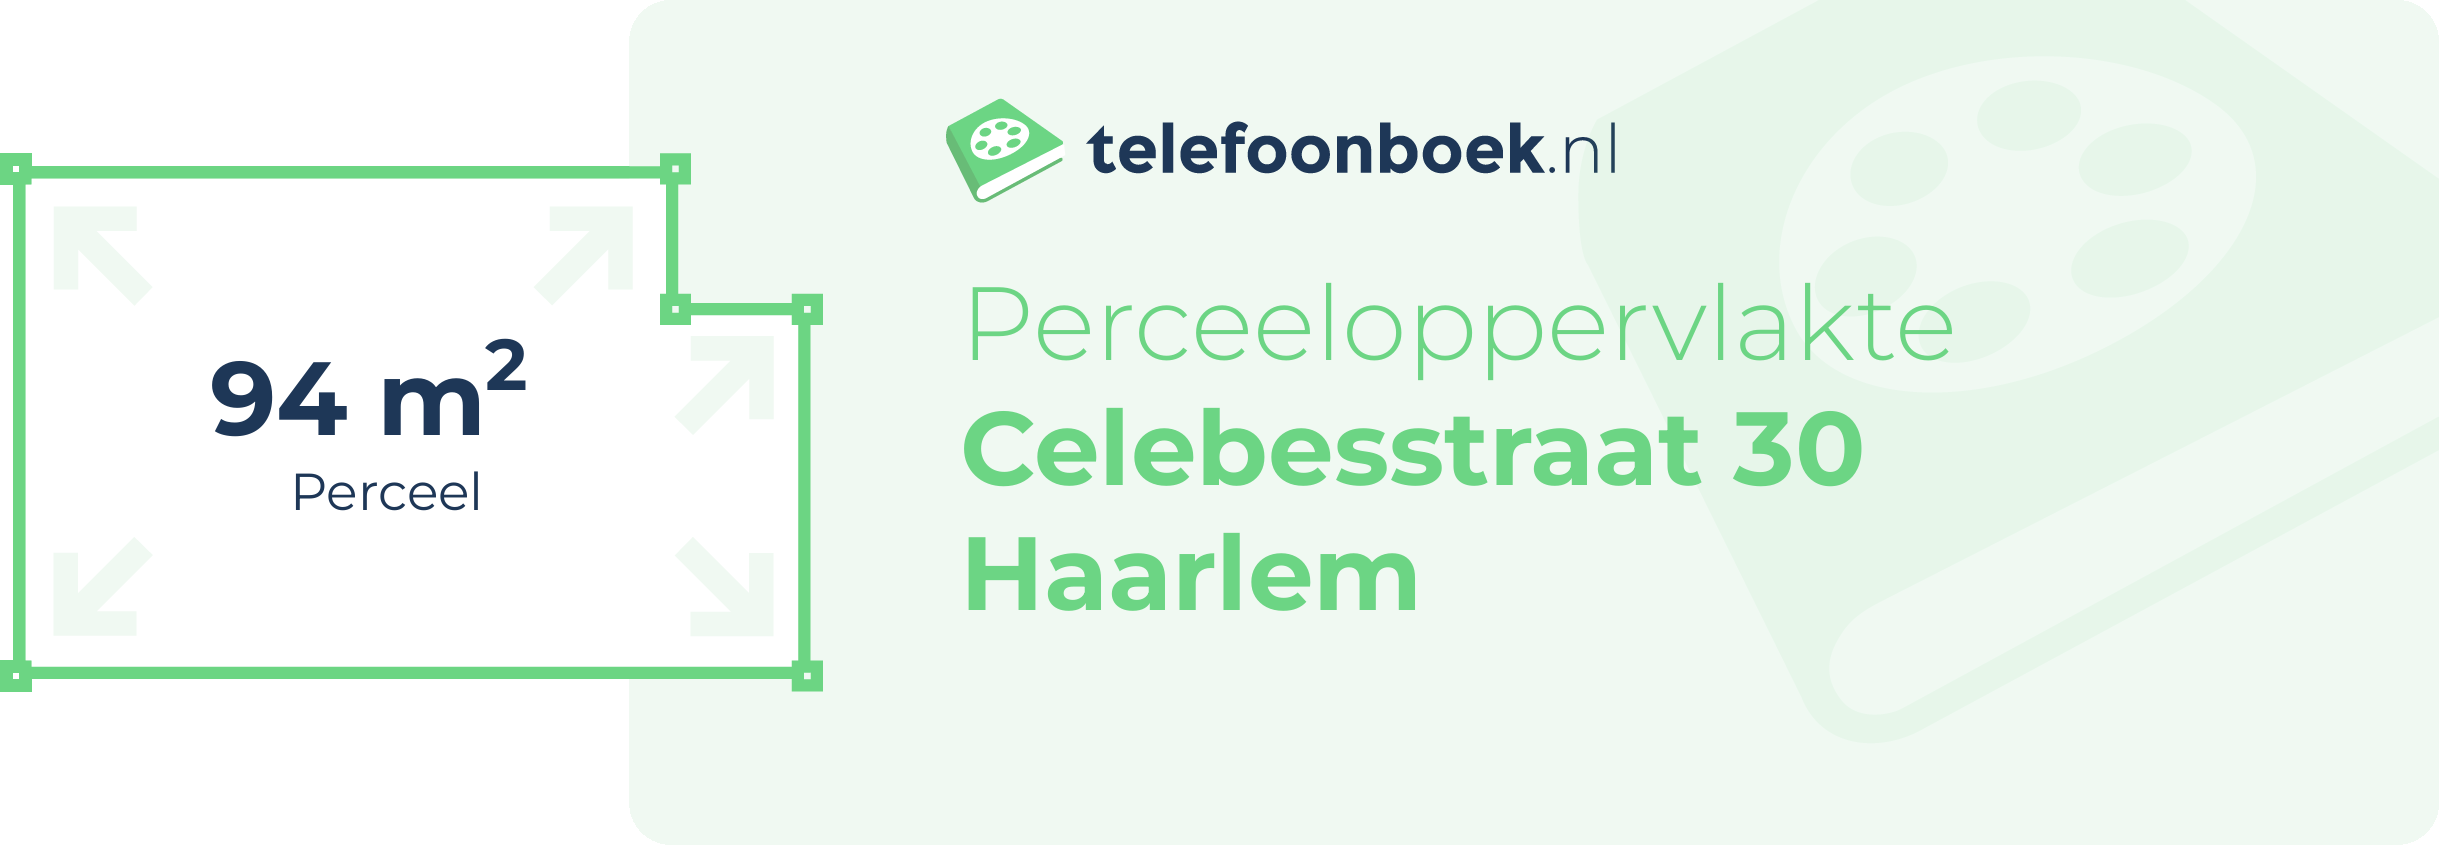 Perceeloppervlakte Celebesstraat 30 Haarlem